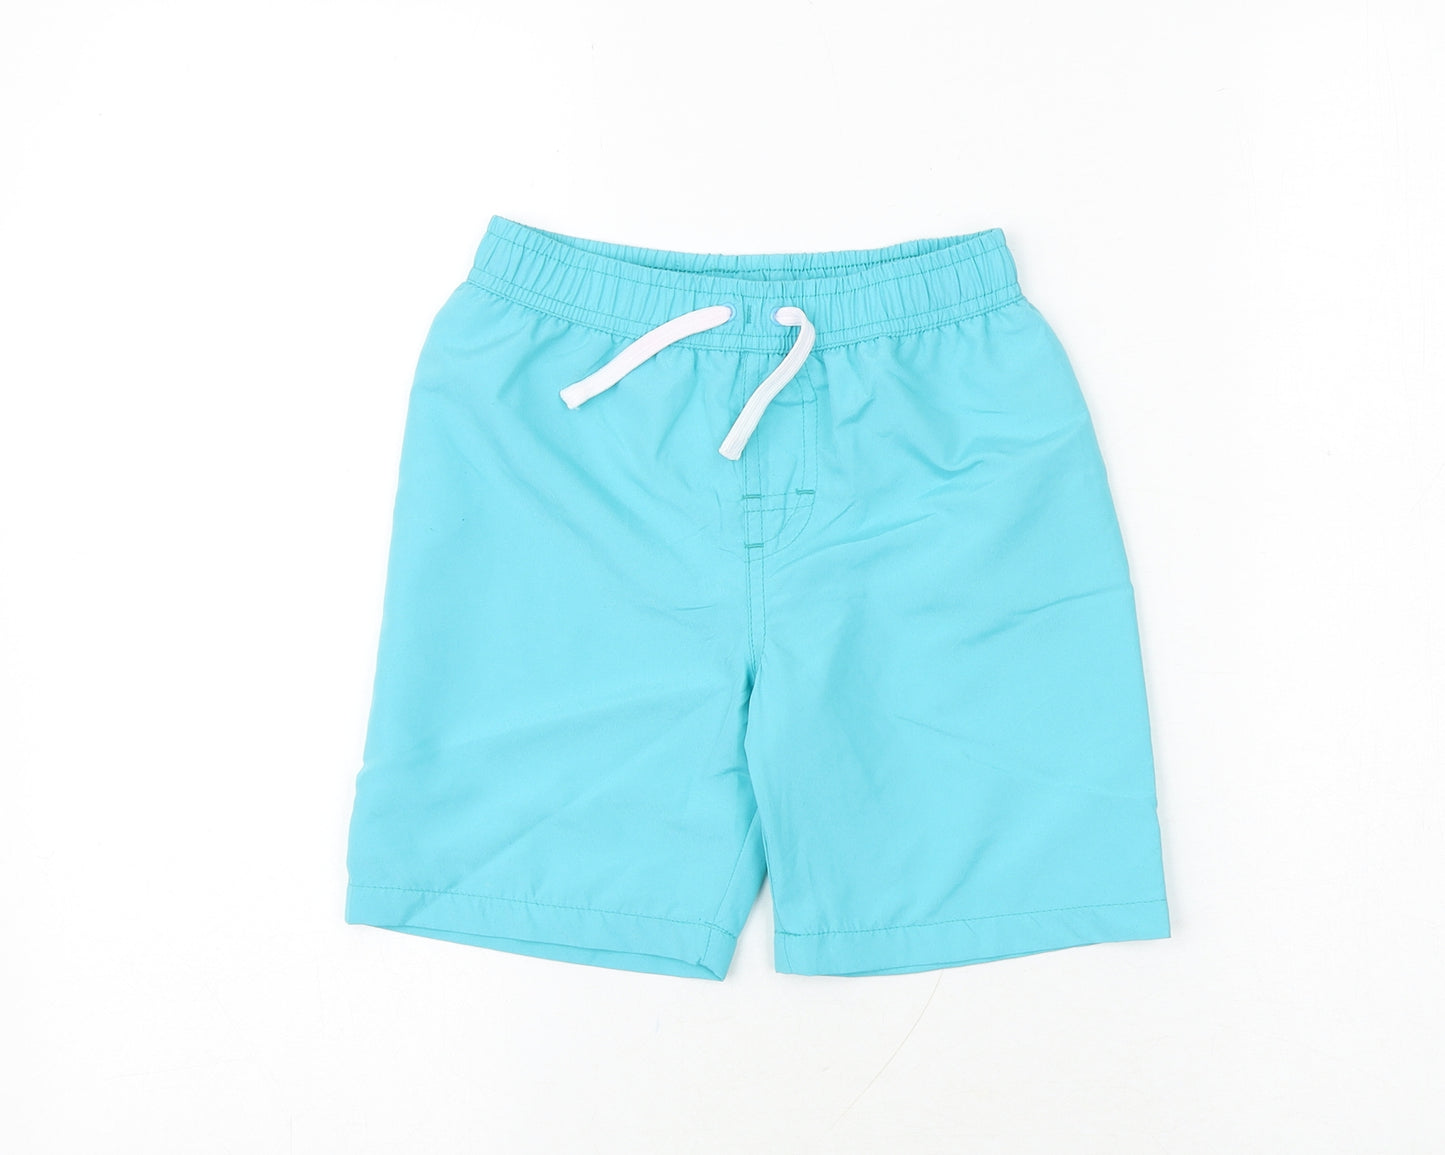 URBAN RASCALS Boys Blue Polyester Sweat Shorts Size 7-8 Years Regular Drawstring - Swim Shorts